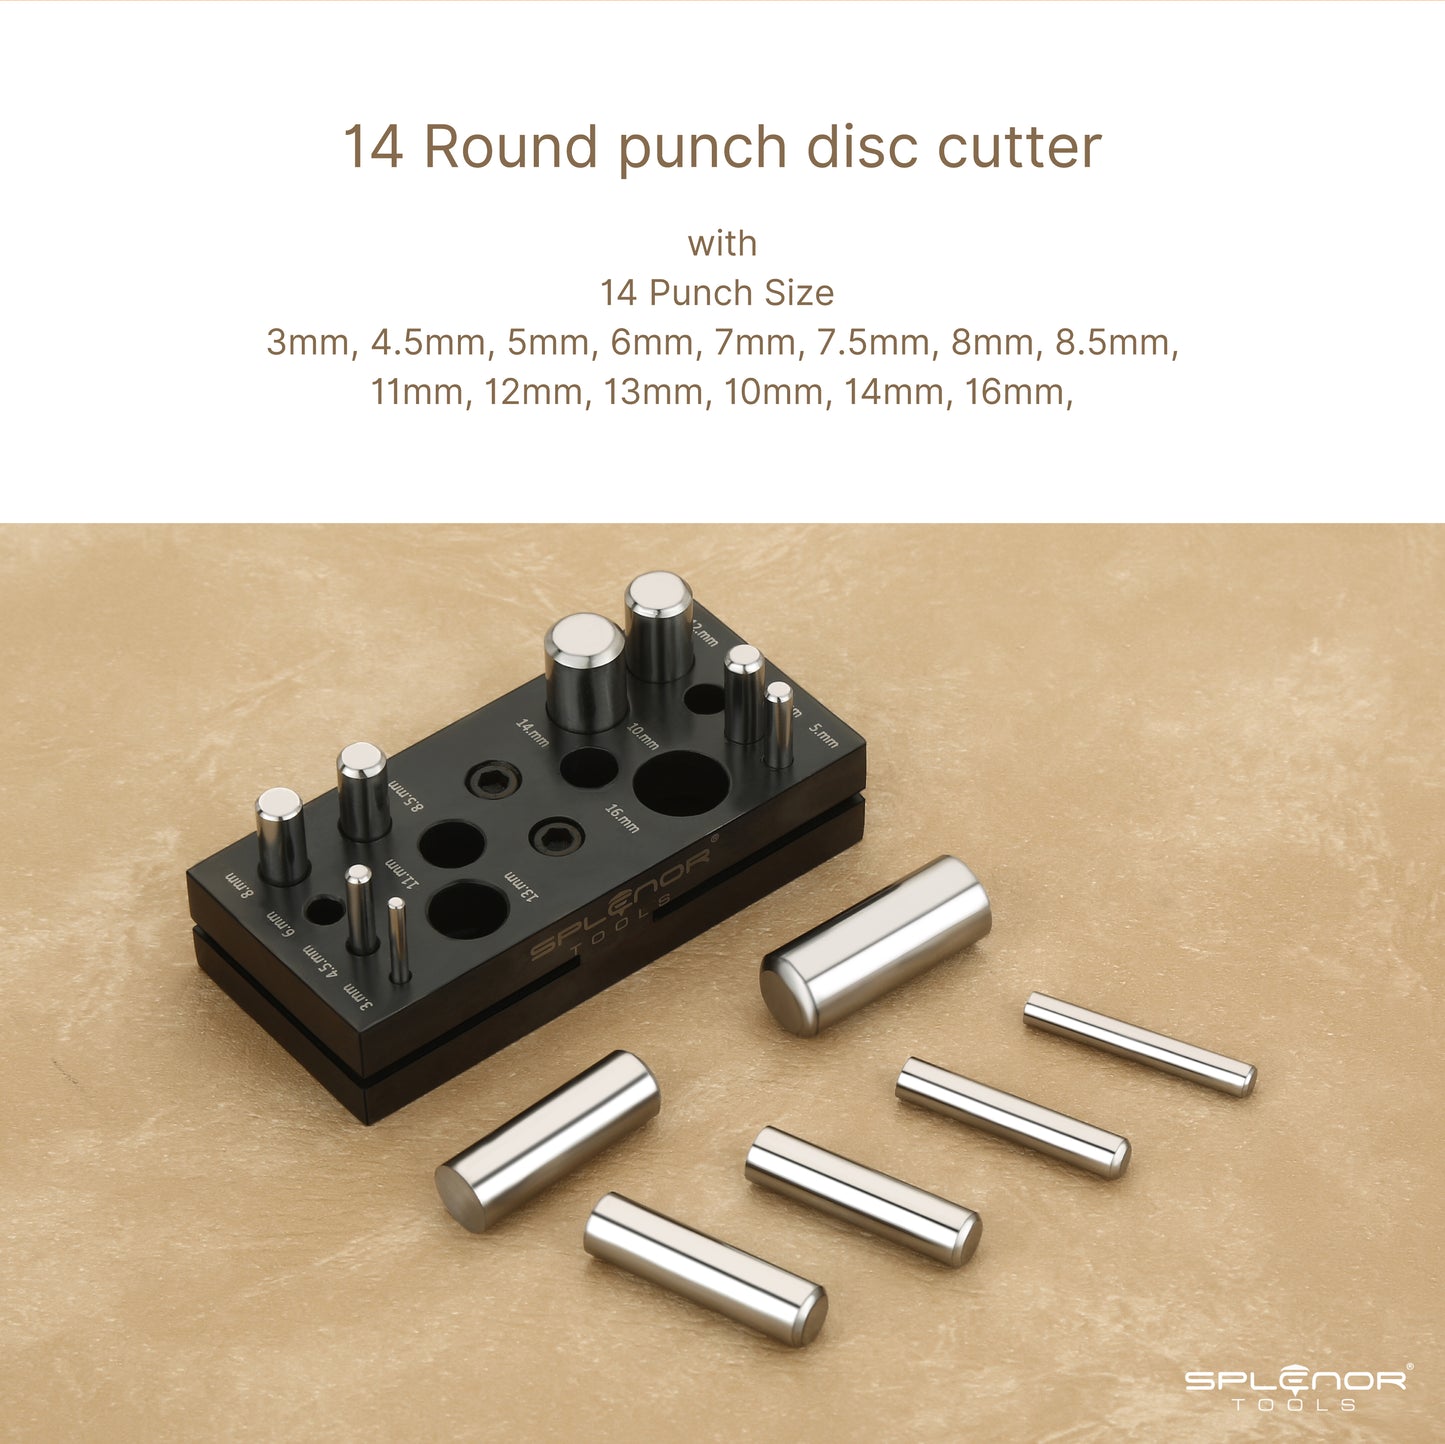 14 round punch disc cutter